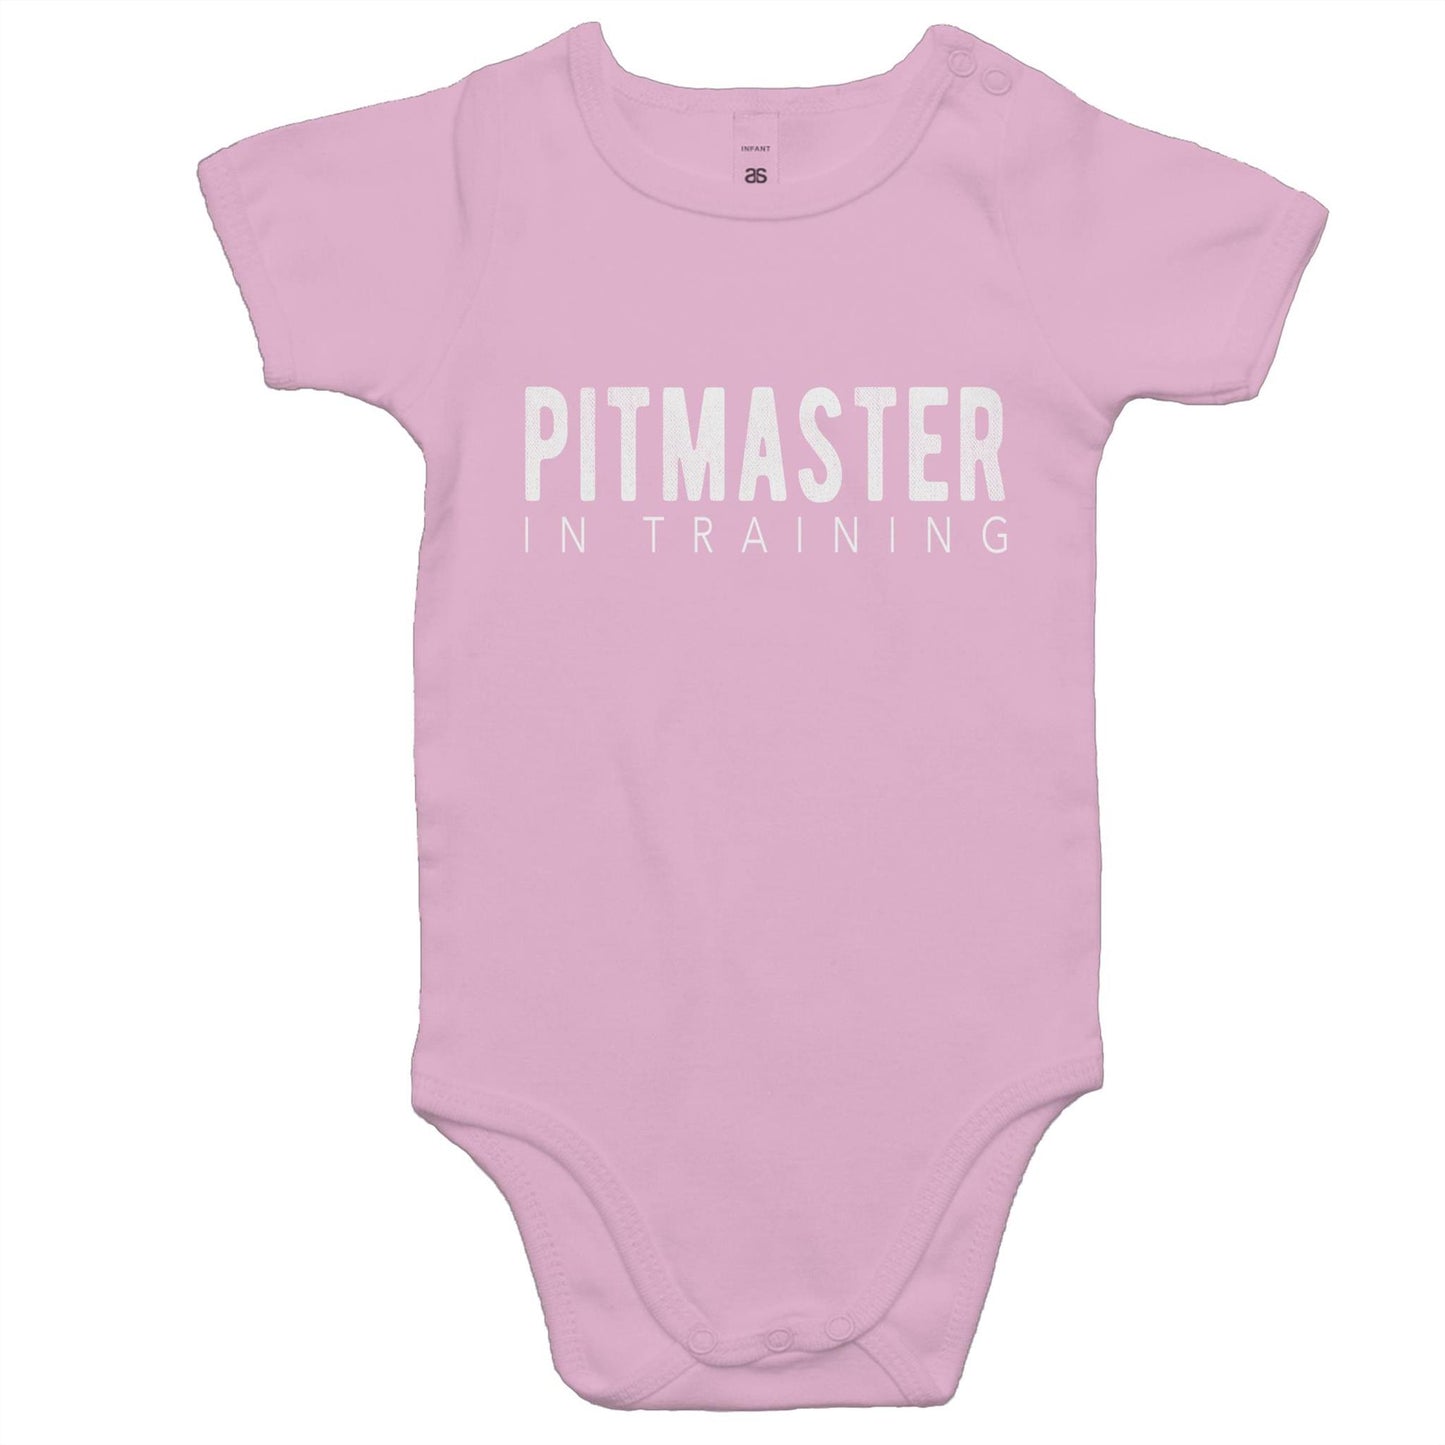 "Pitmaster in Training" Baby Onesie Romper